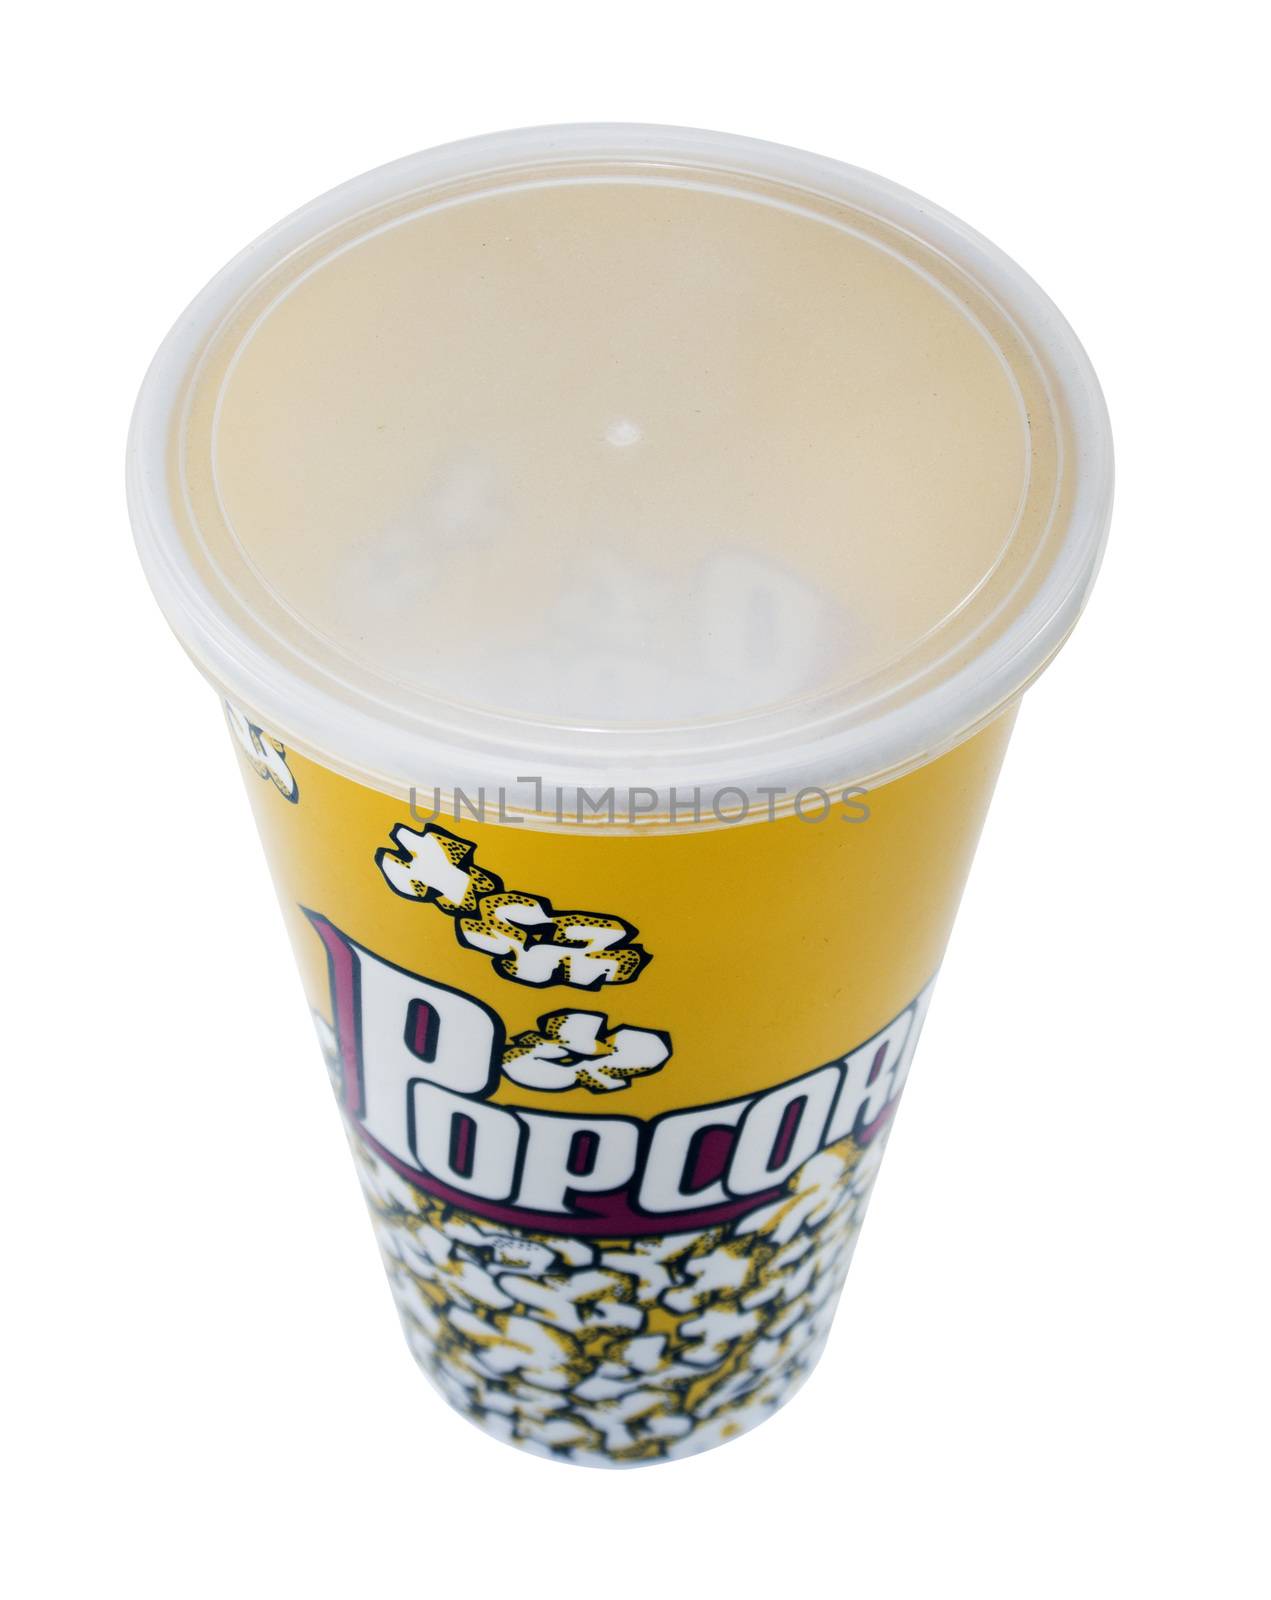 Popcorn bucket by designsstock